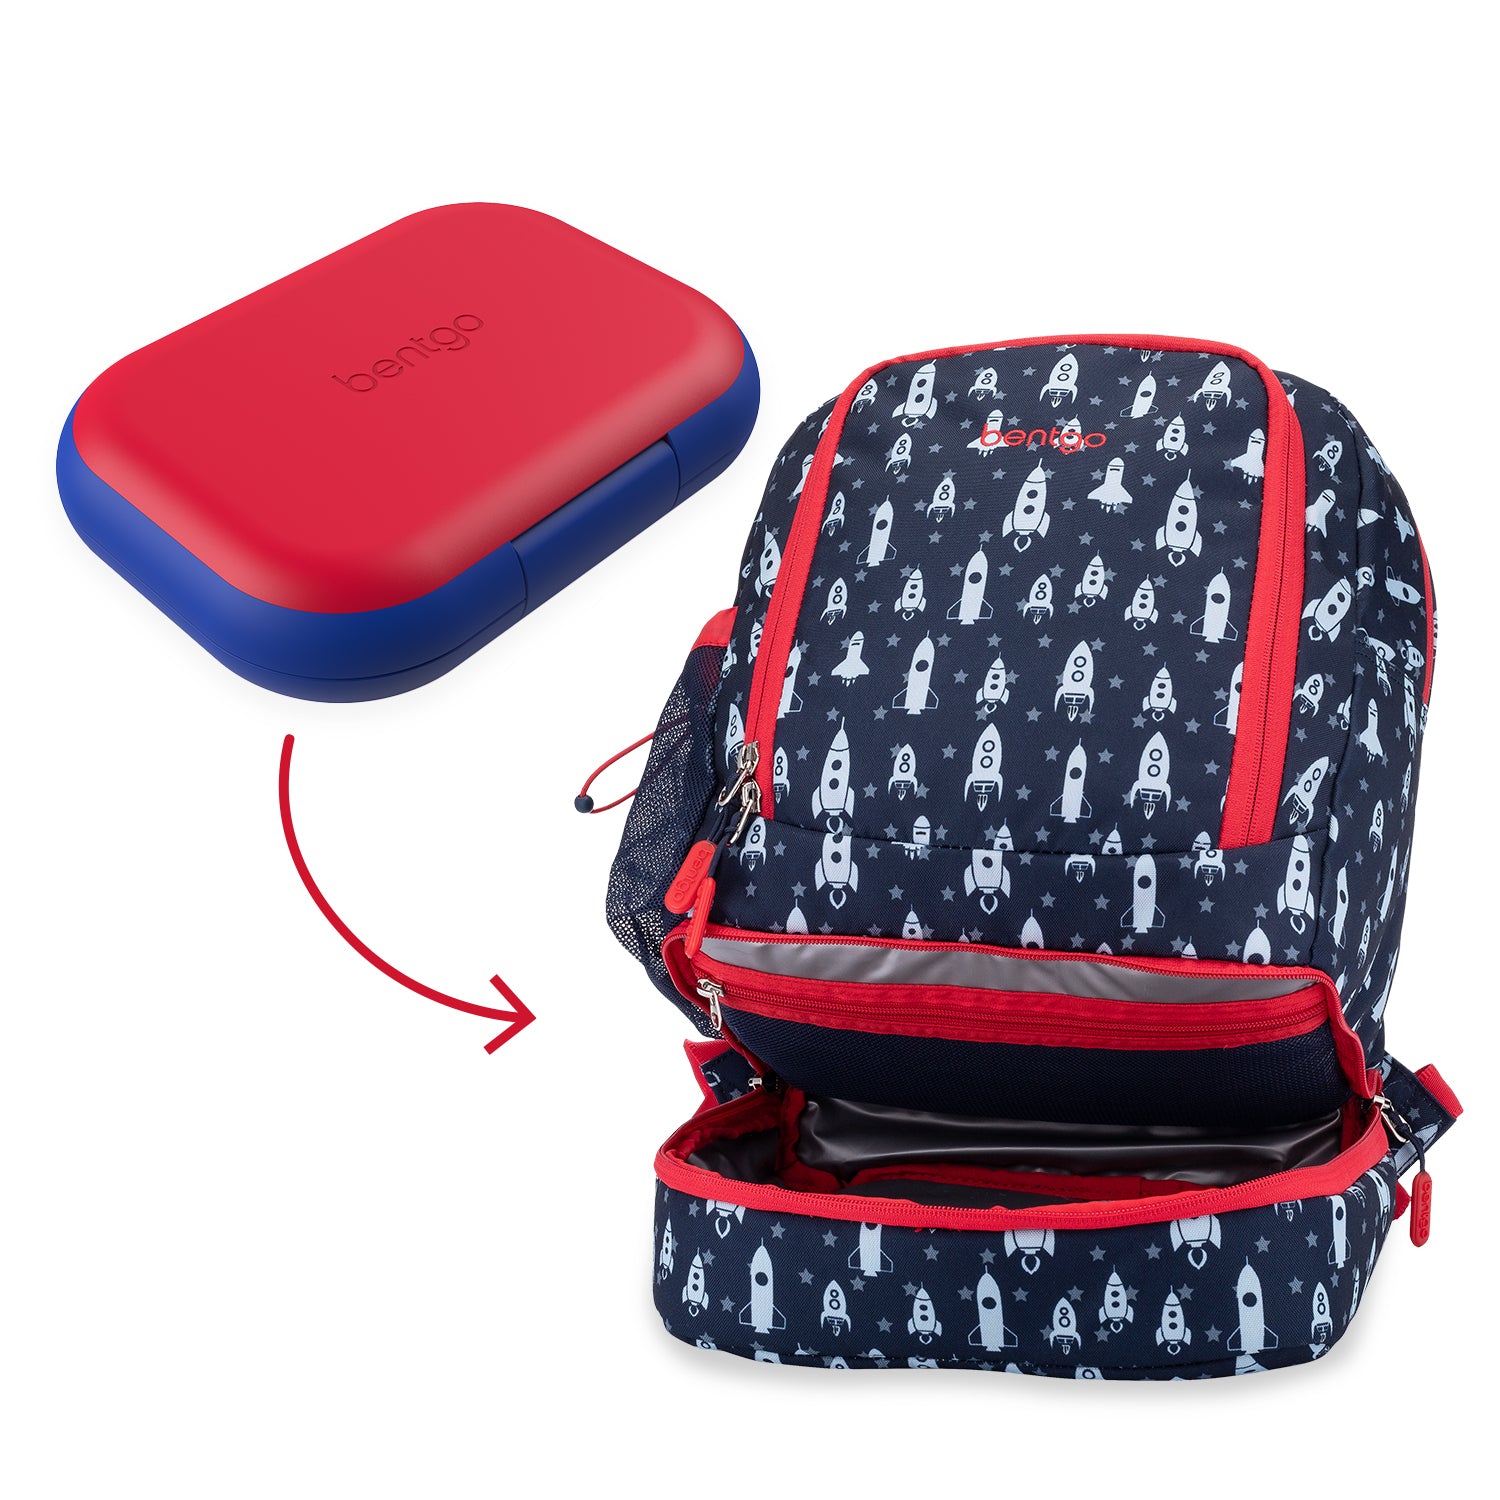 Bentgo Kids Durable & Leak Proof Rocket Children's Lunch Box - Red